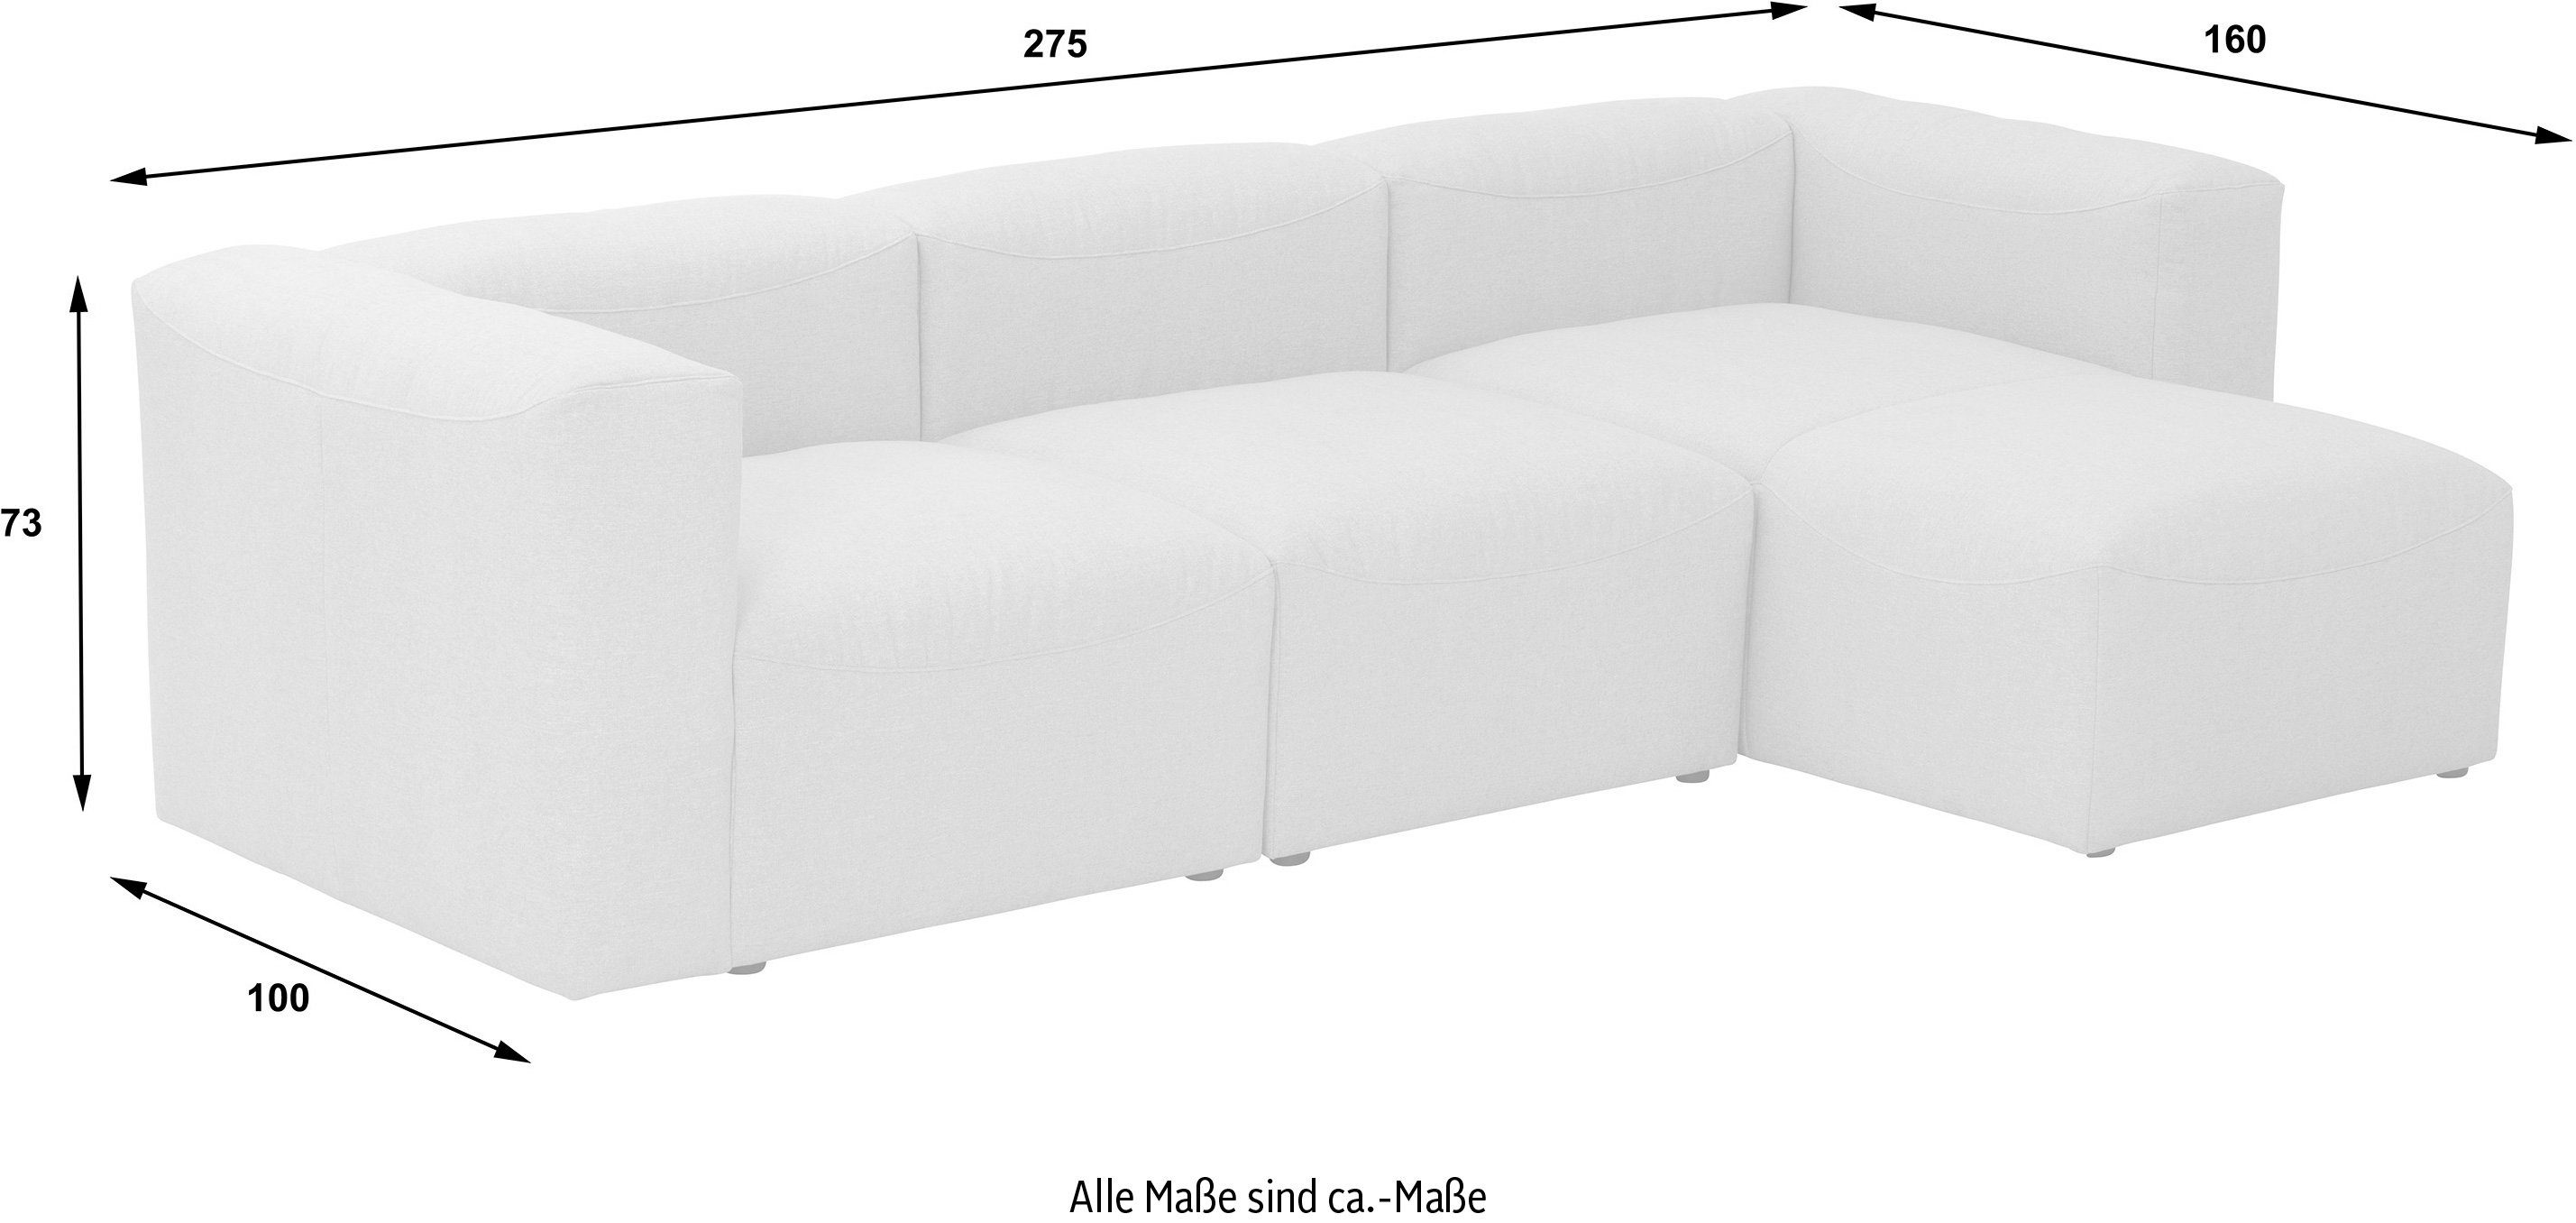 Sitz-Elementen, Ecksofa Teile, creme aus 3 individuell 02 Winzer® kombinierbar 3 Spar-Set Sofa-Set Max Lena,